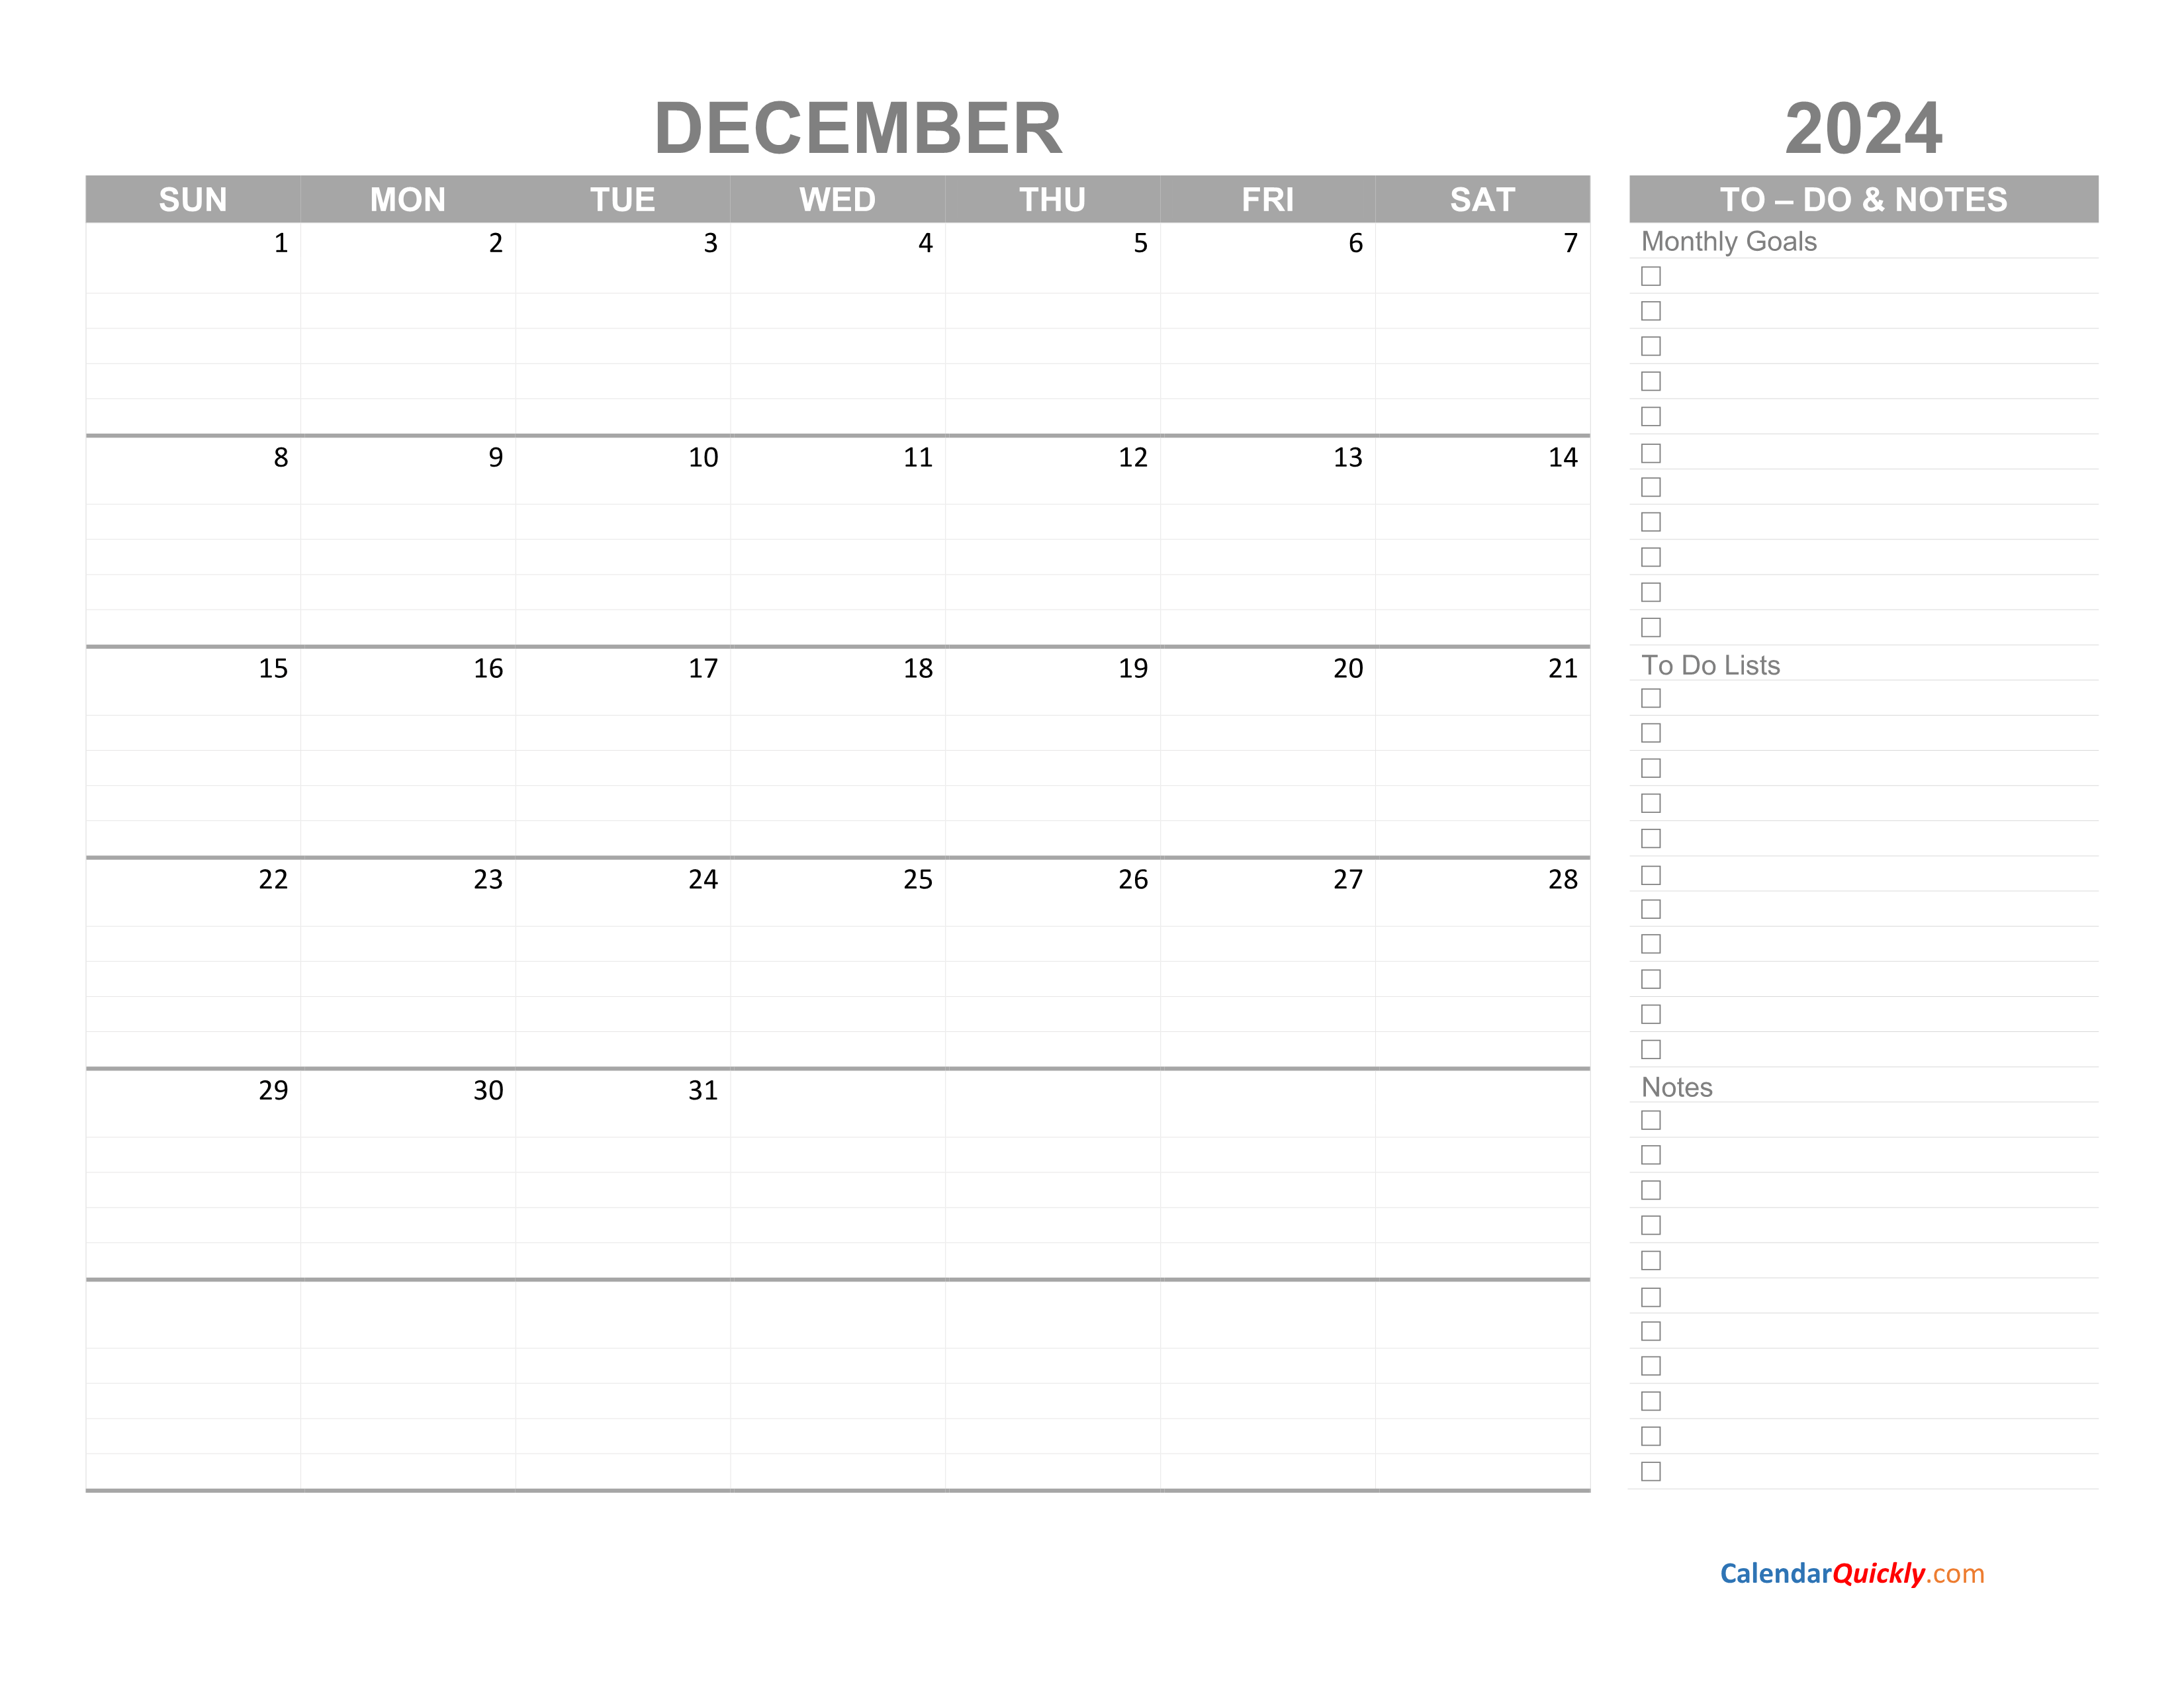 December 2024 Through March 2024 Calendar Best Latest Review of